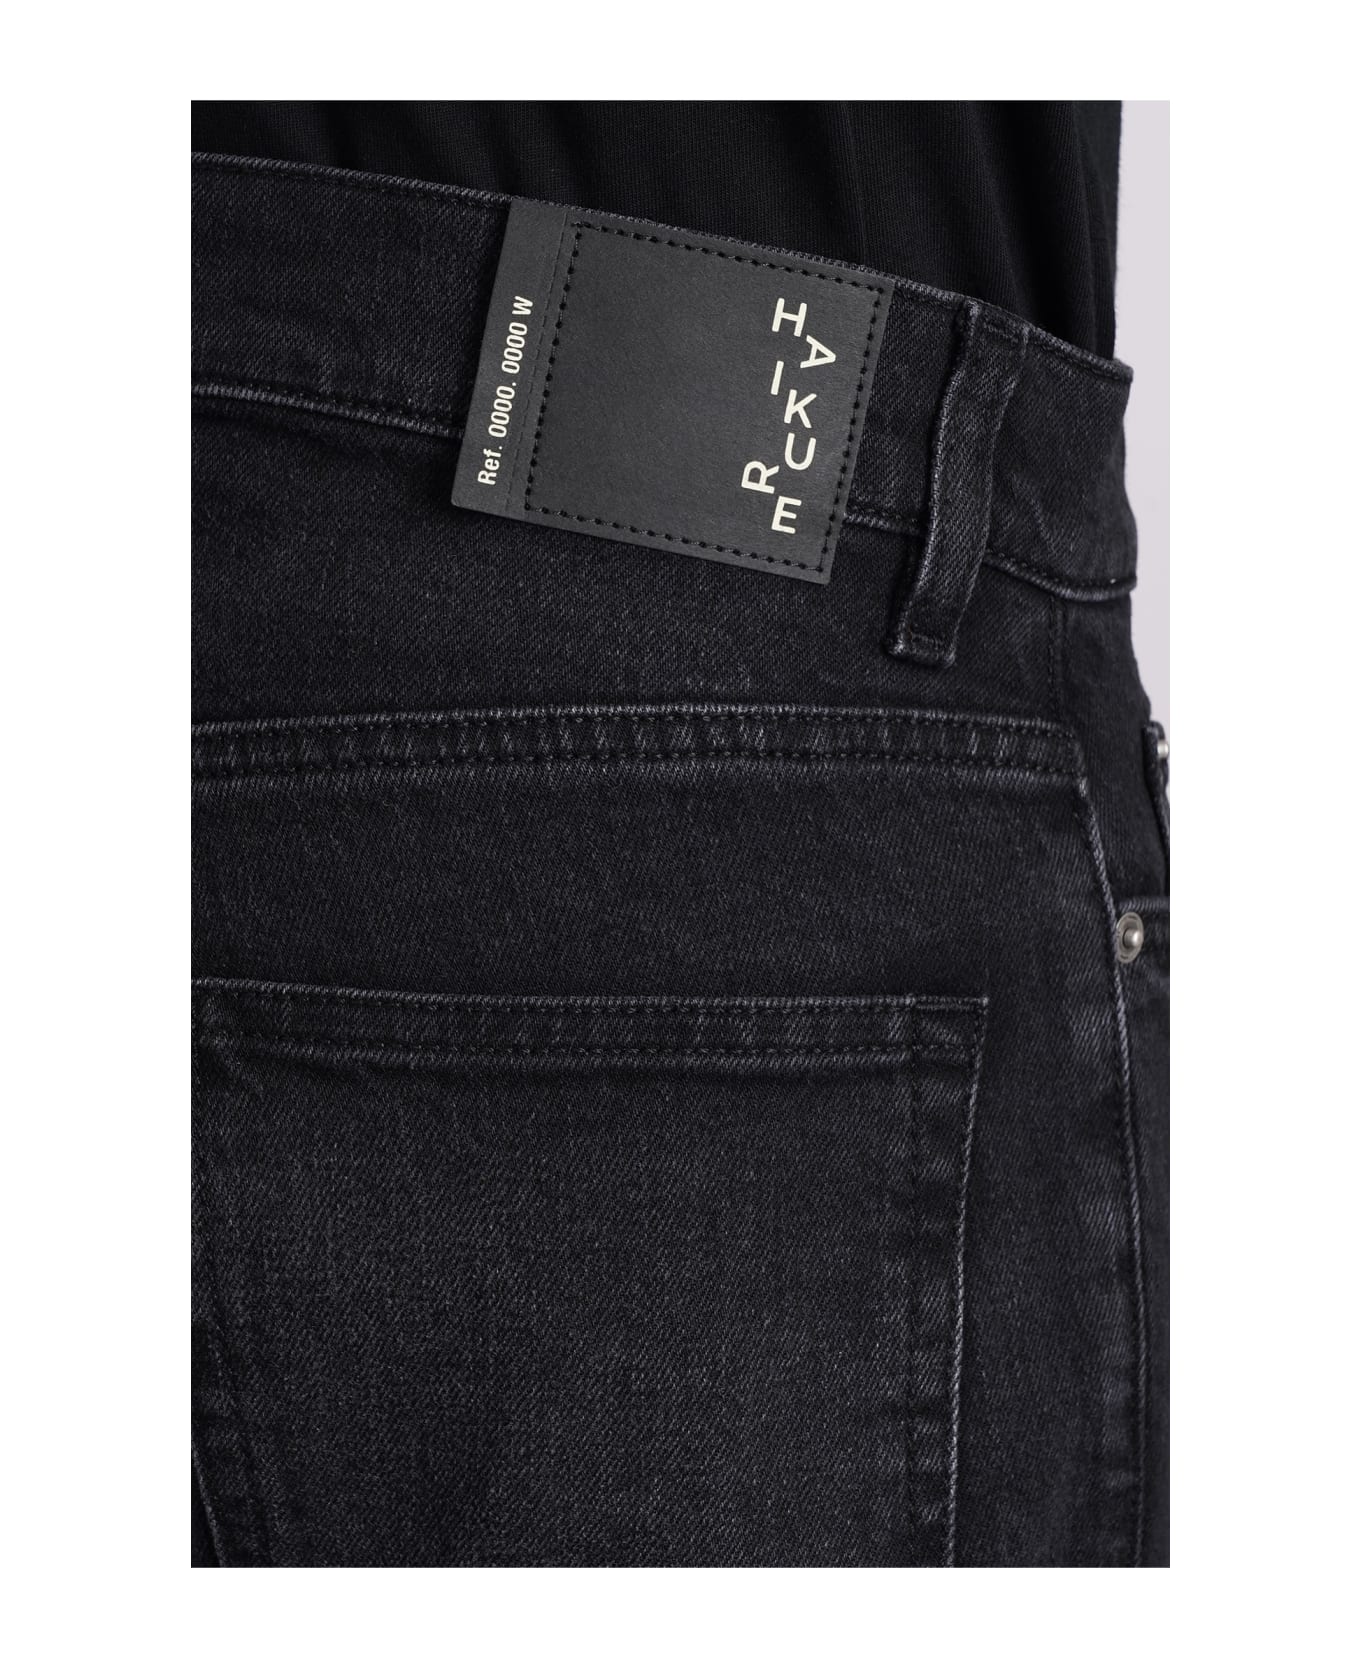 Haikure Tokyo Jeans In Black Cotton - black デニム